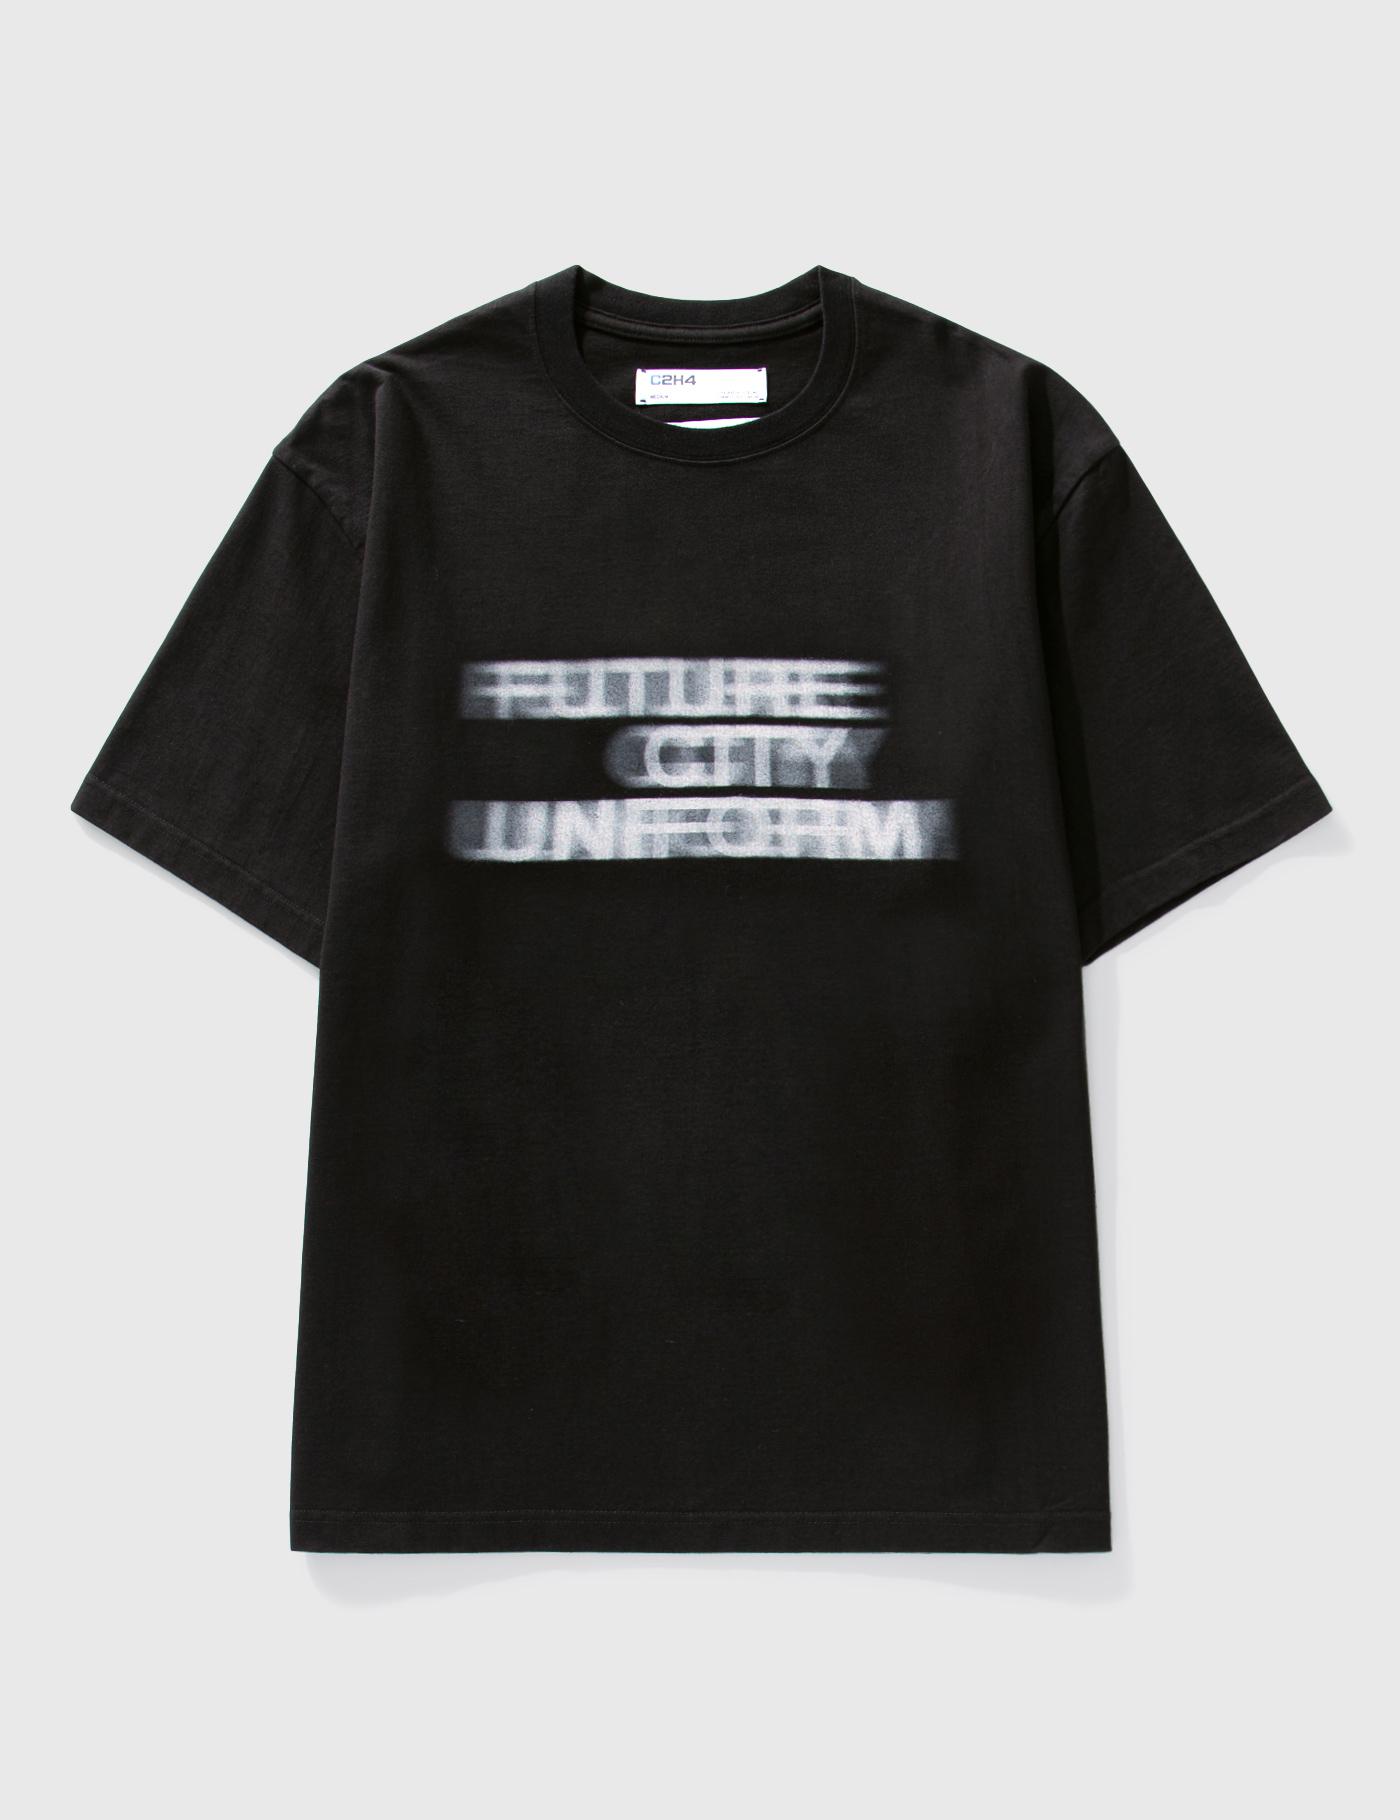 Blurred Future City Uniform T-shirt by C2H4